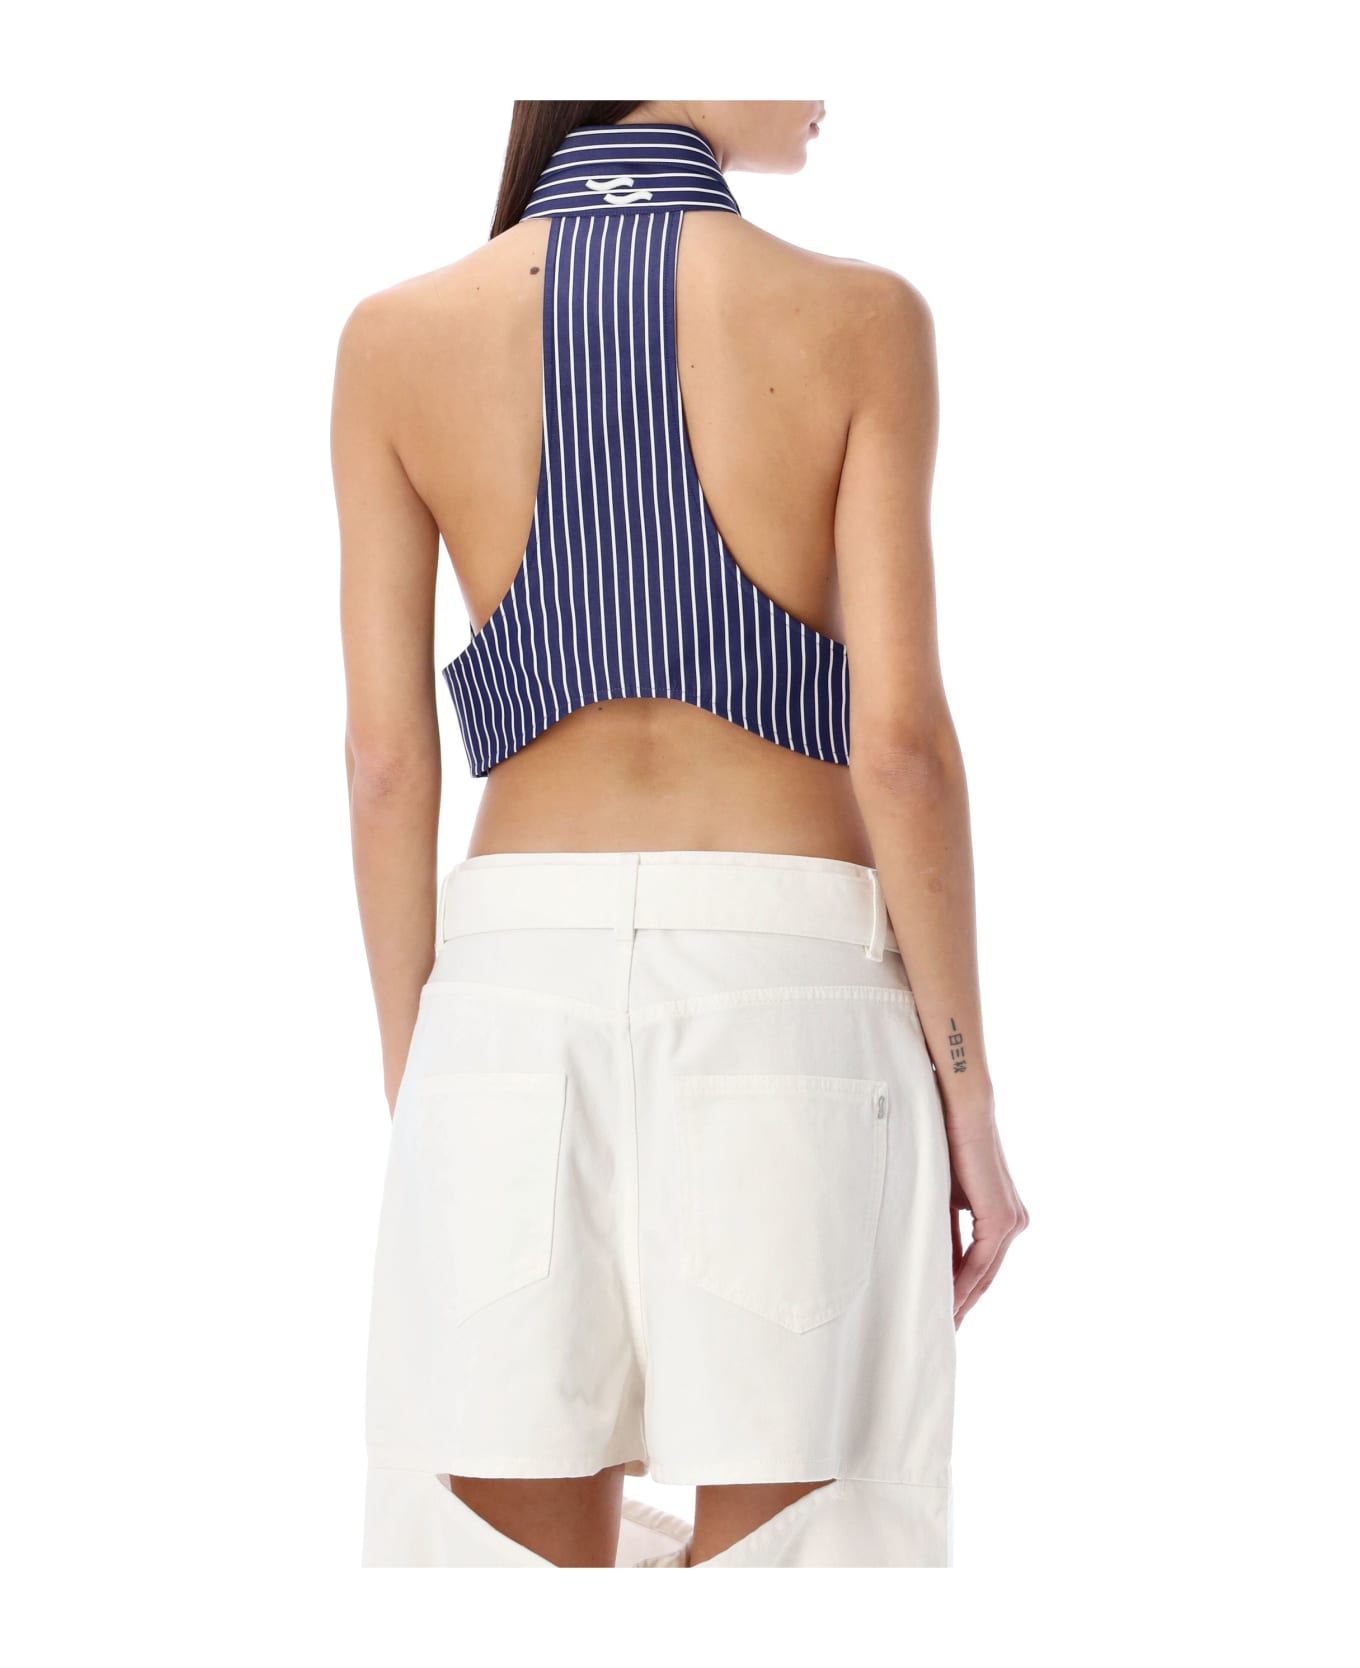 SSHEENA Cute Shirt Top Stripes - LIGHT BLUE STRIPE